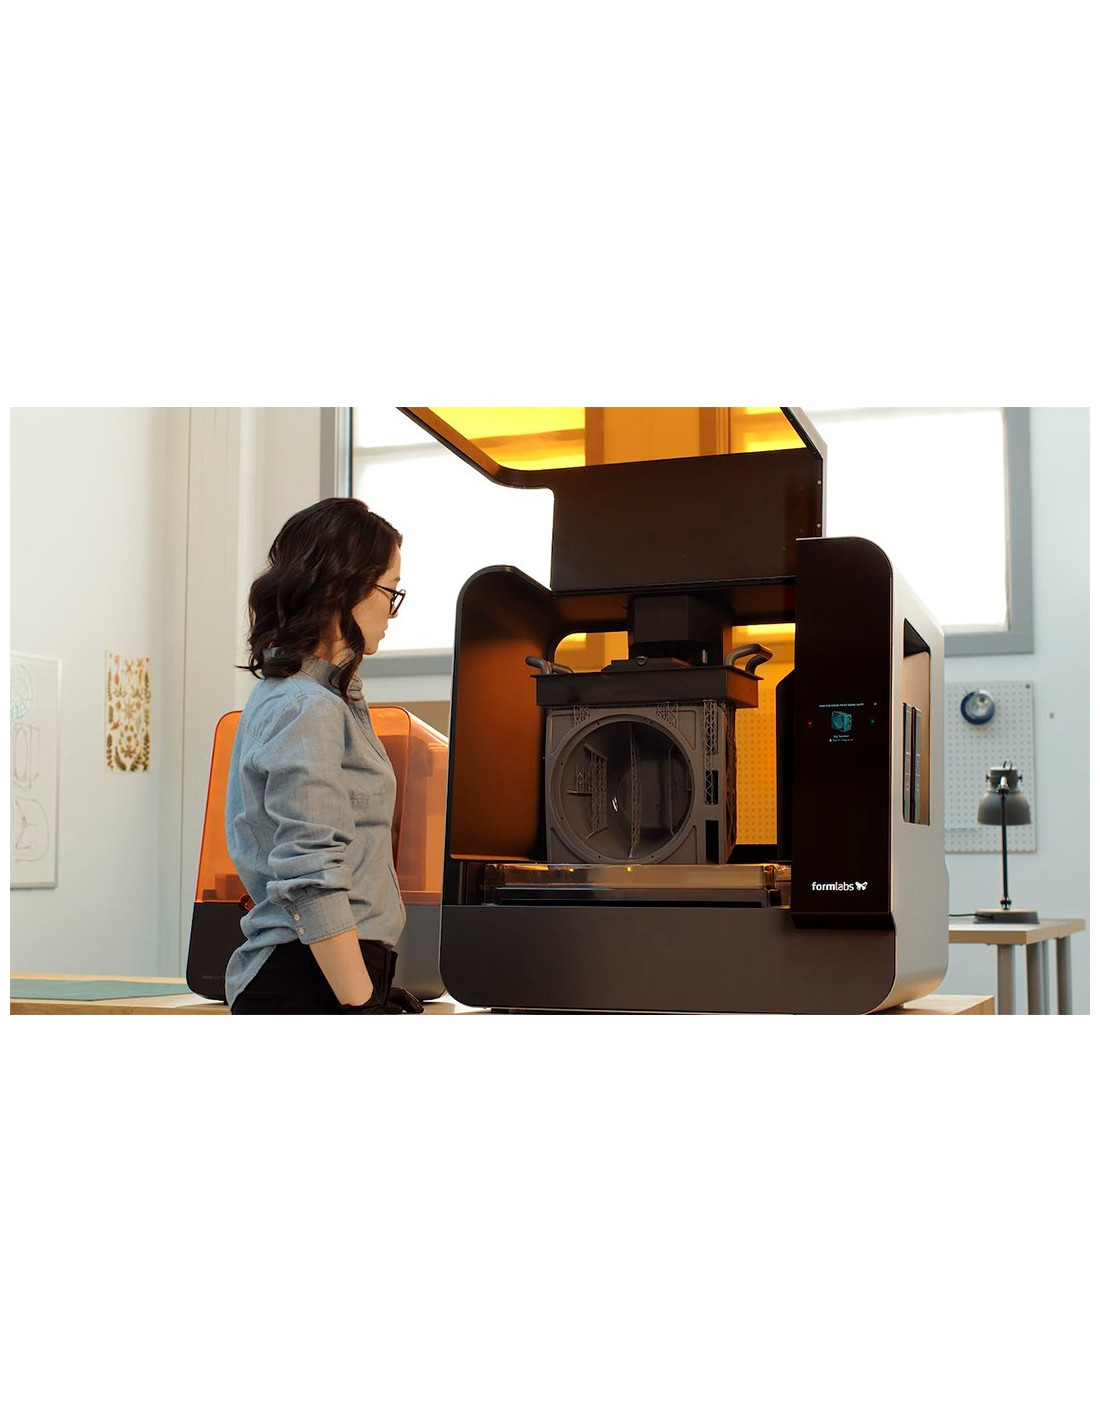 Impresora 3D FormLabs Form 3L